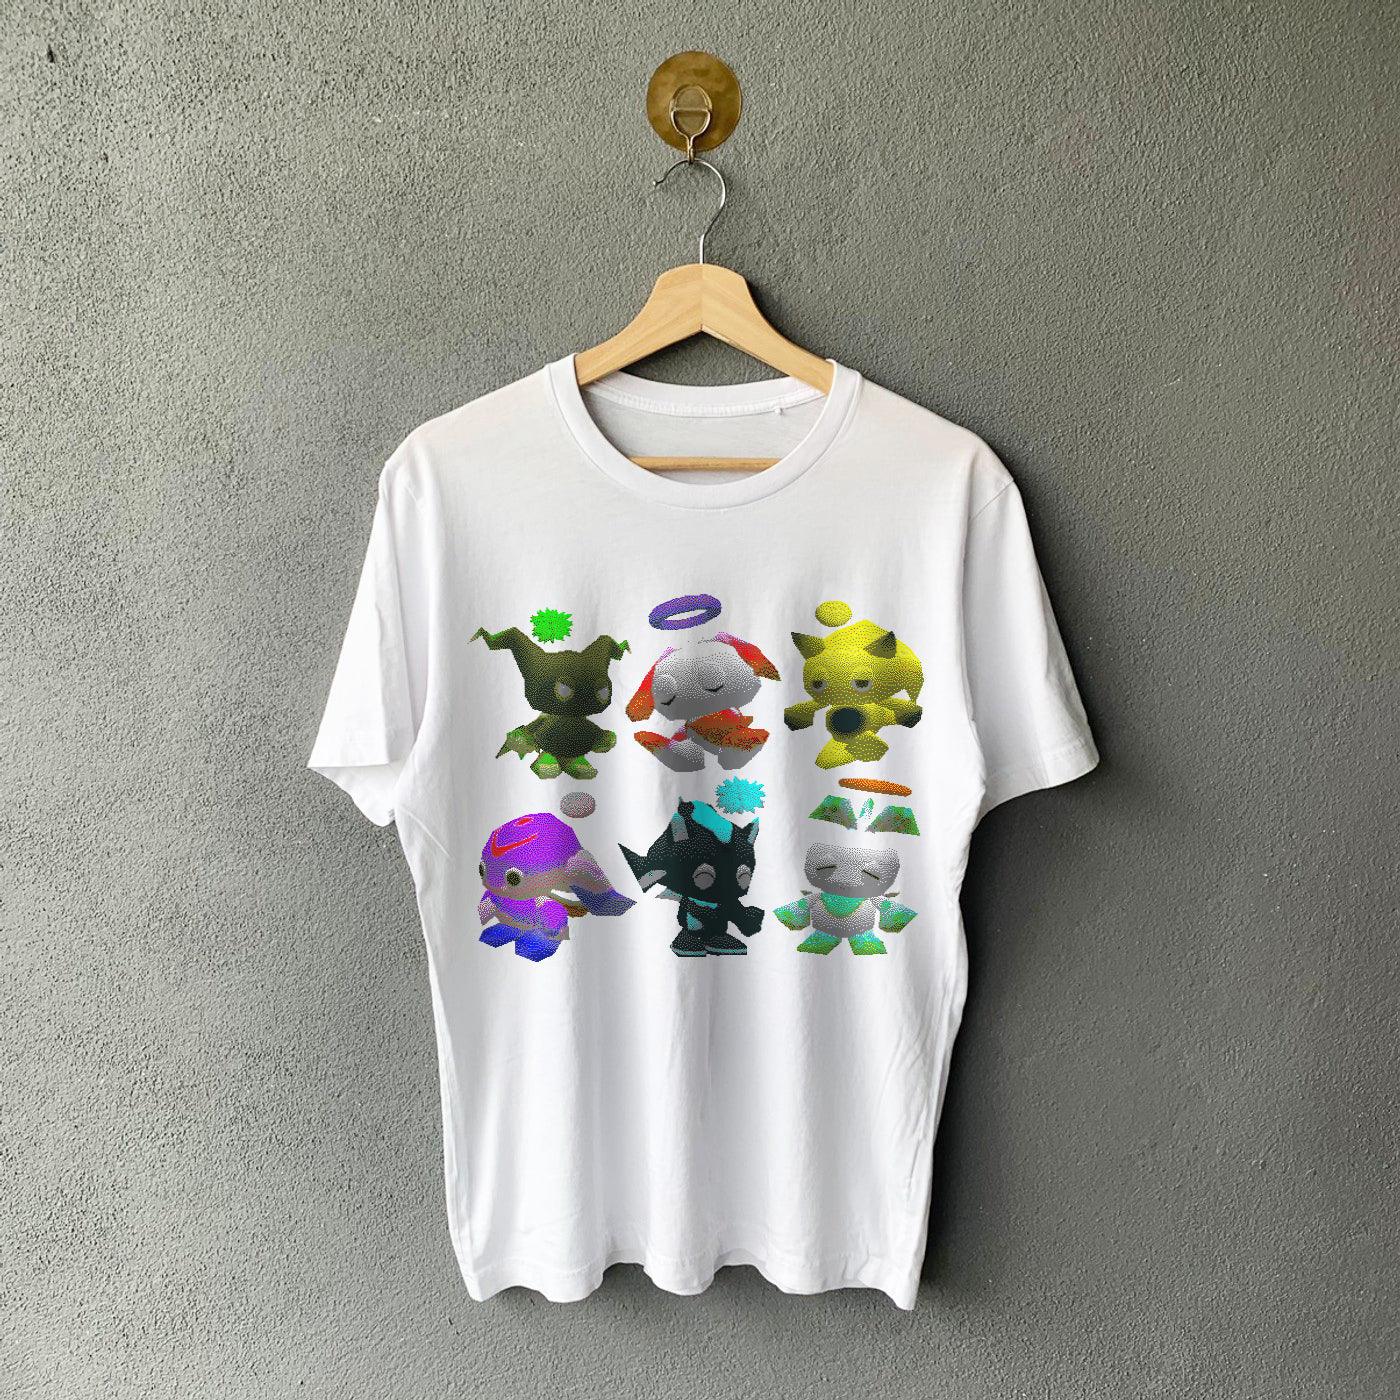 C Gang® Unisex T-Shirt (a few pieces made) - Kikillo Club